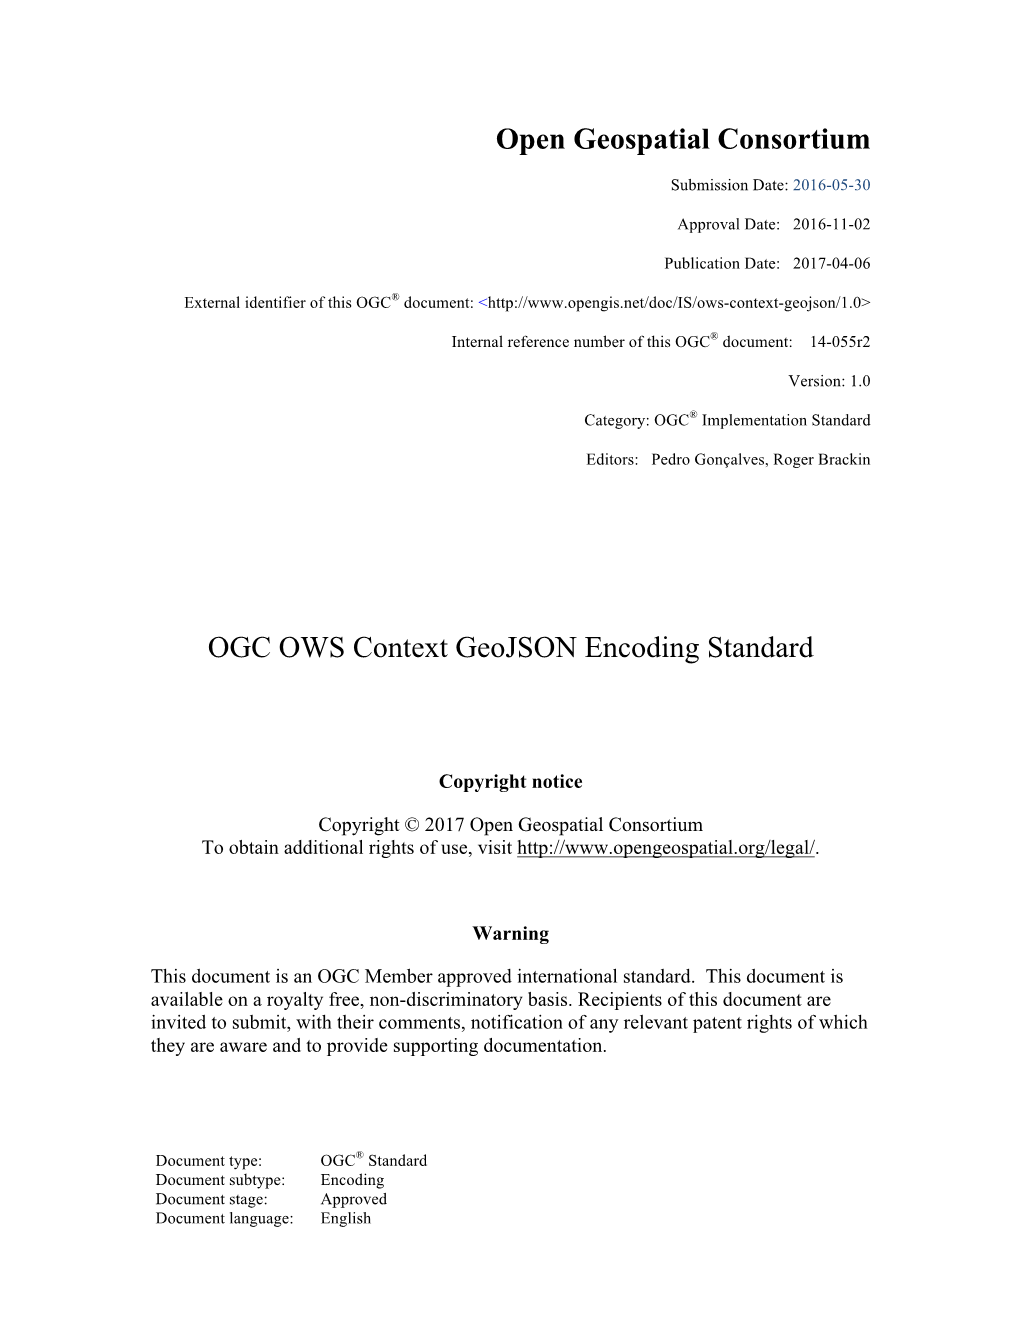 Open Geospatial Consortium OGC OWS Context Geojson Encoding